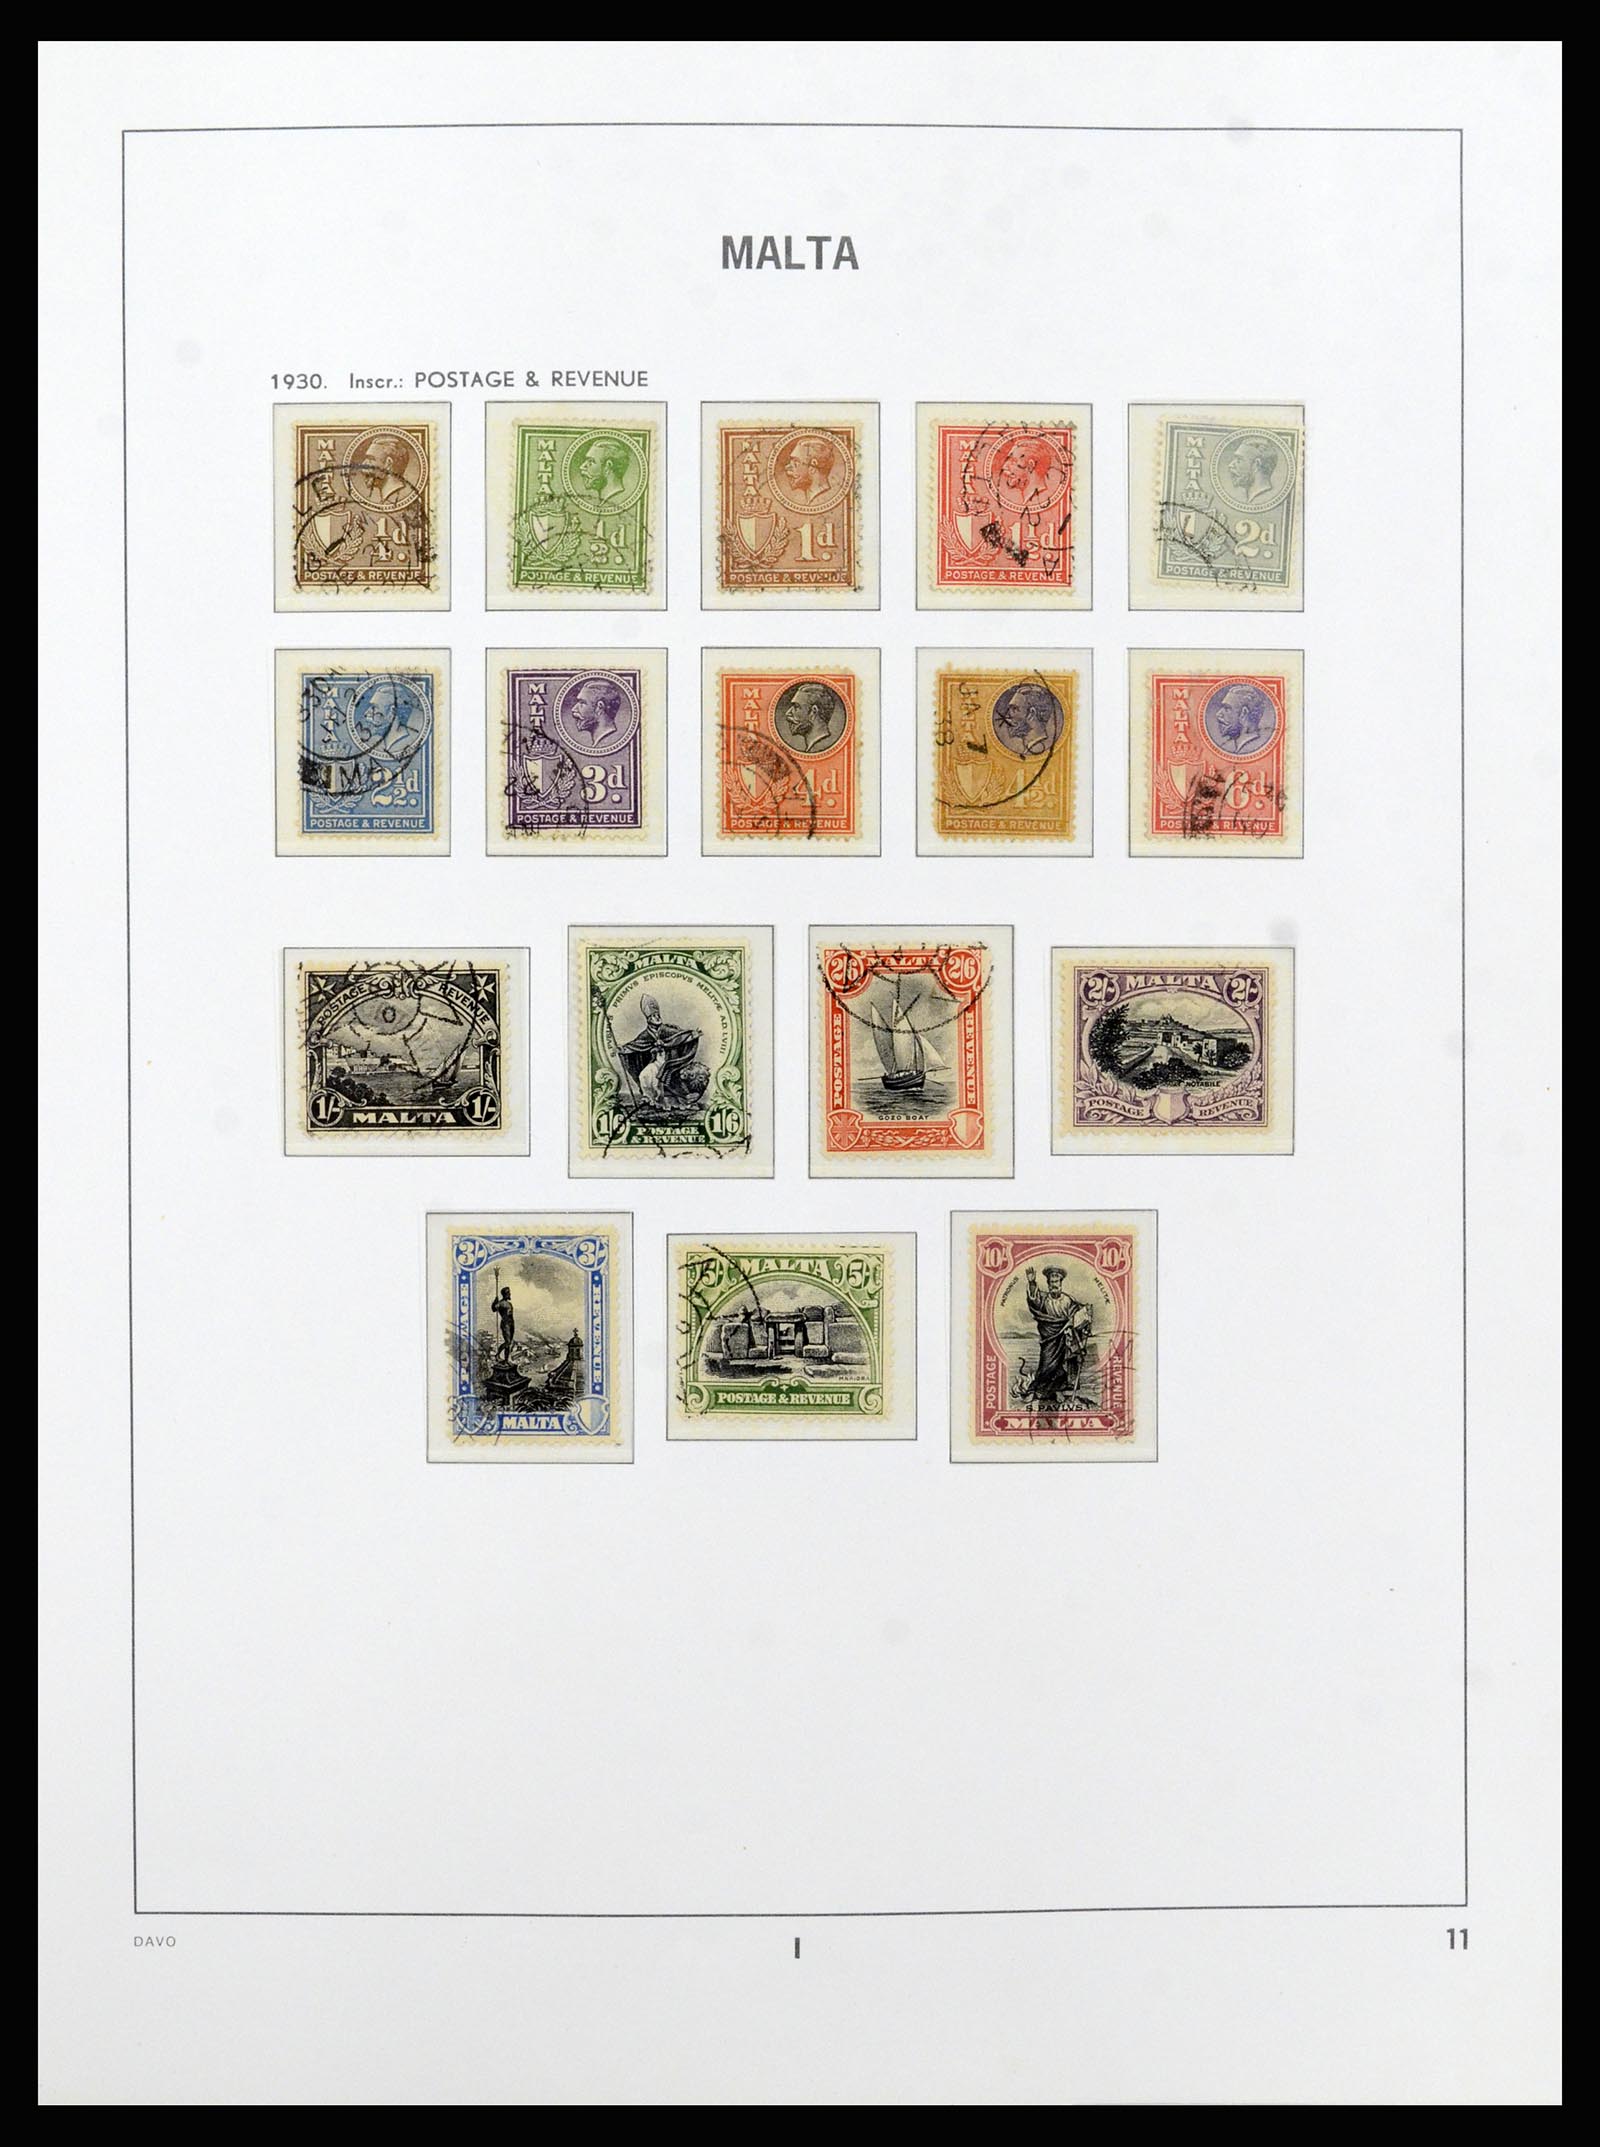 37212 011 - Stamp collection 37212 Malta 1863-1989.